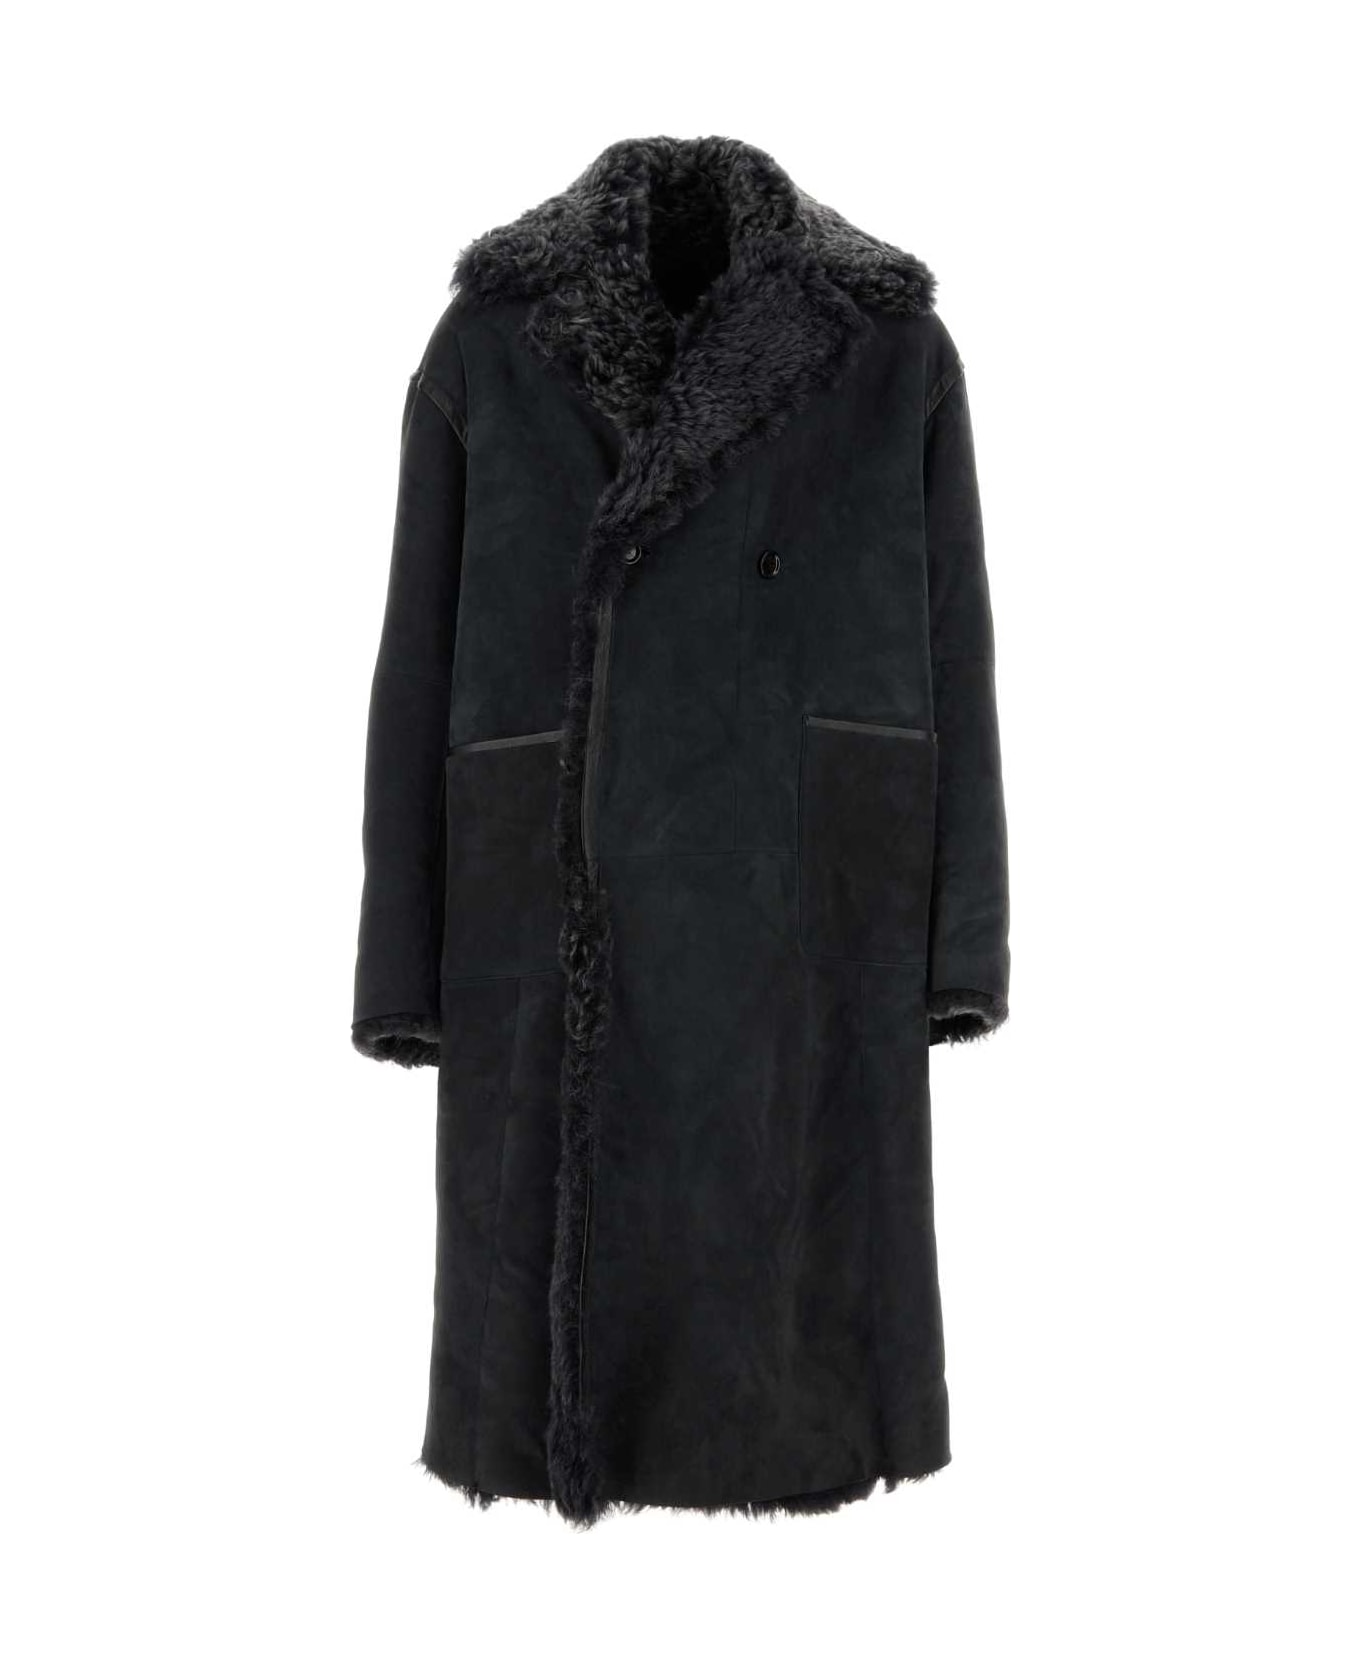 Dolce & Gabbana Black Suede Coat - N0000 コート